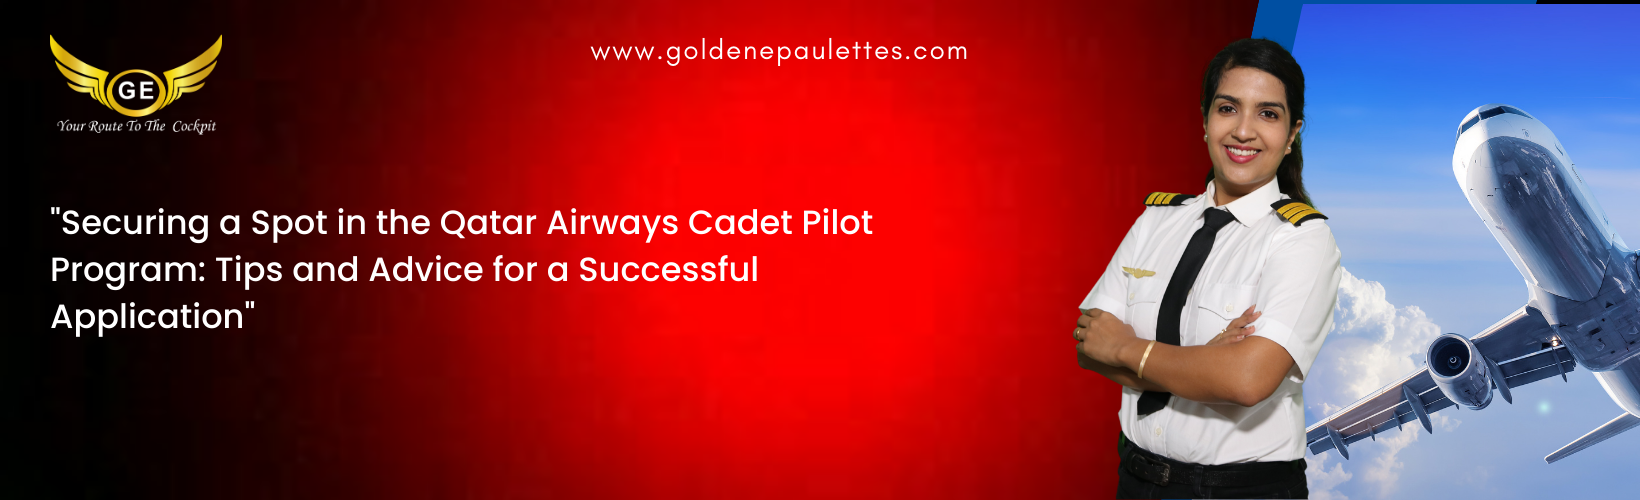 Exploring the Qatar Airways Cadet Pilot Program